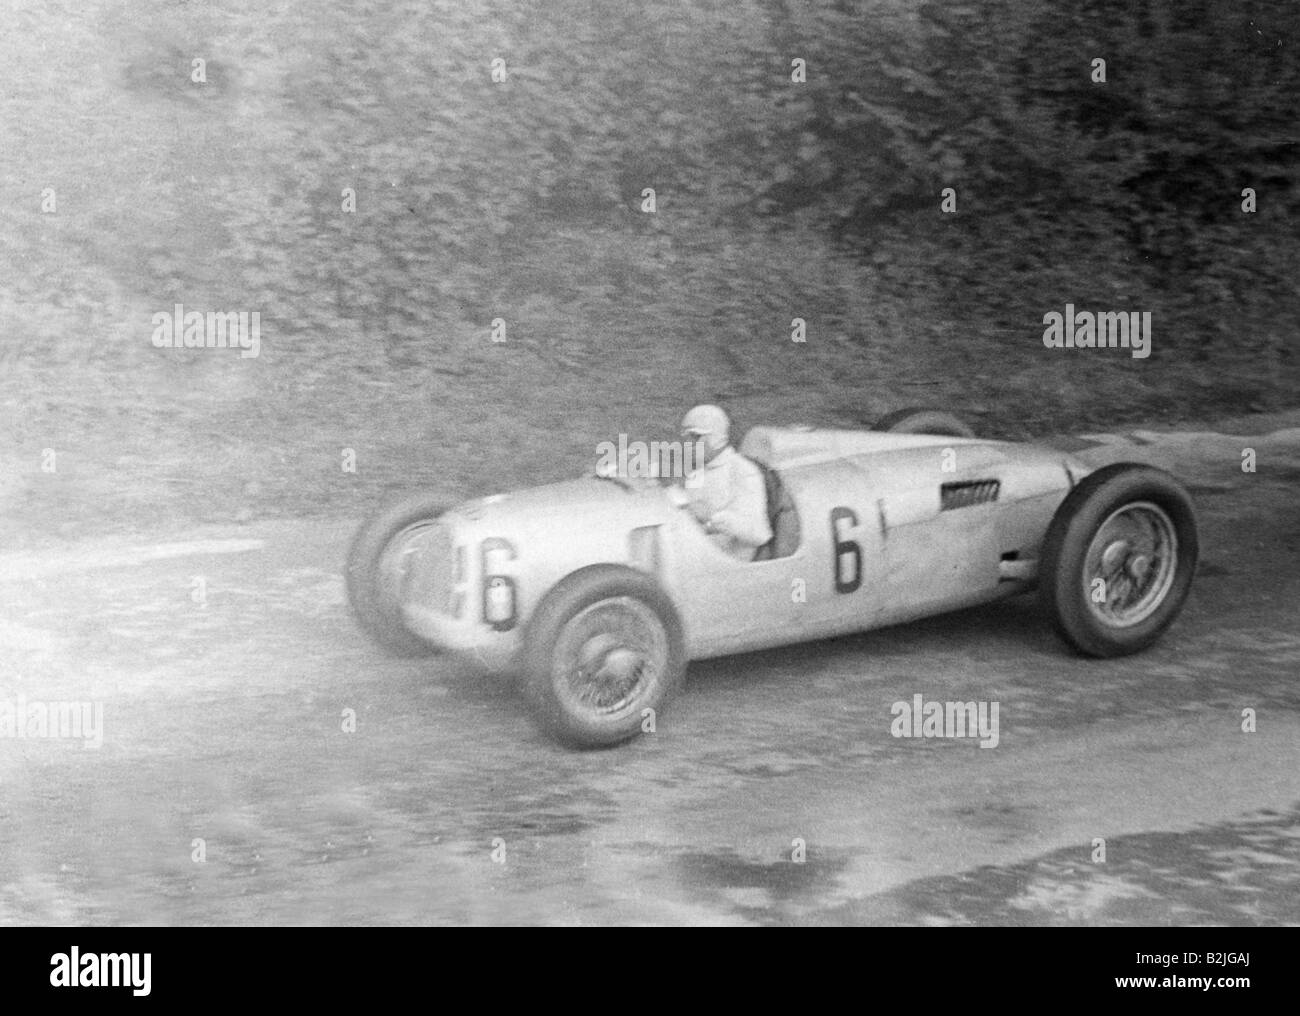 Nuvolari, Tazio Giorgio, 16.11.1892 - 11.8.1953, Italian racecar driver, half length, driving racing car Type C of Auto Union AG, 1930s, Stock Photo